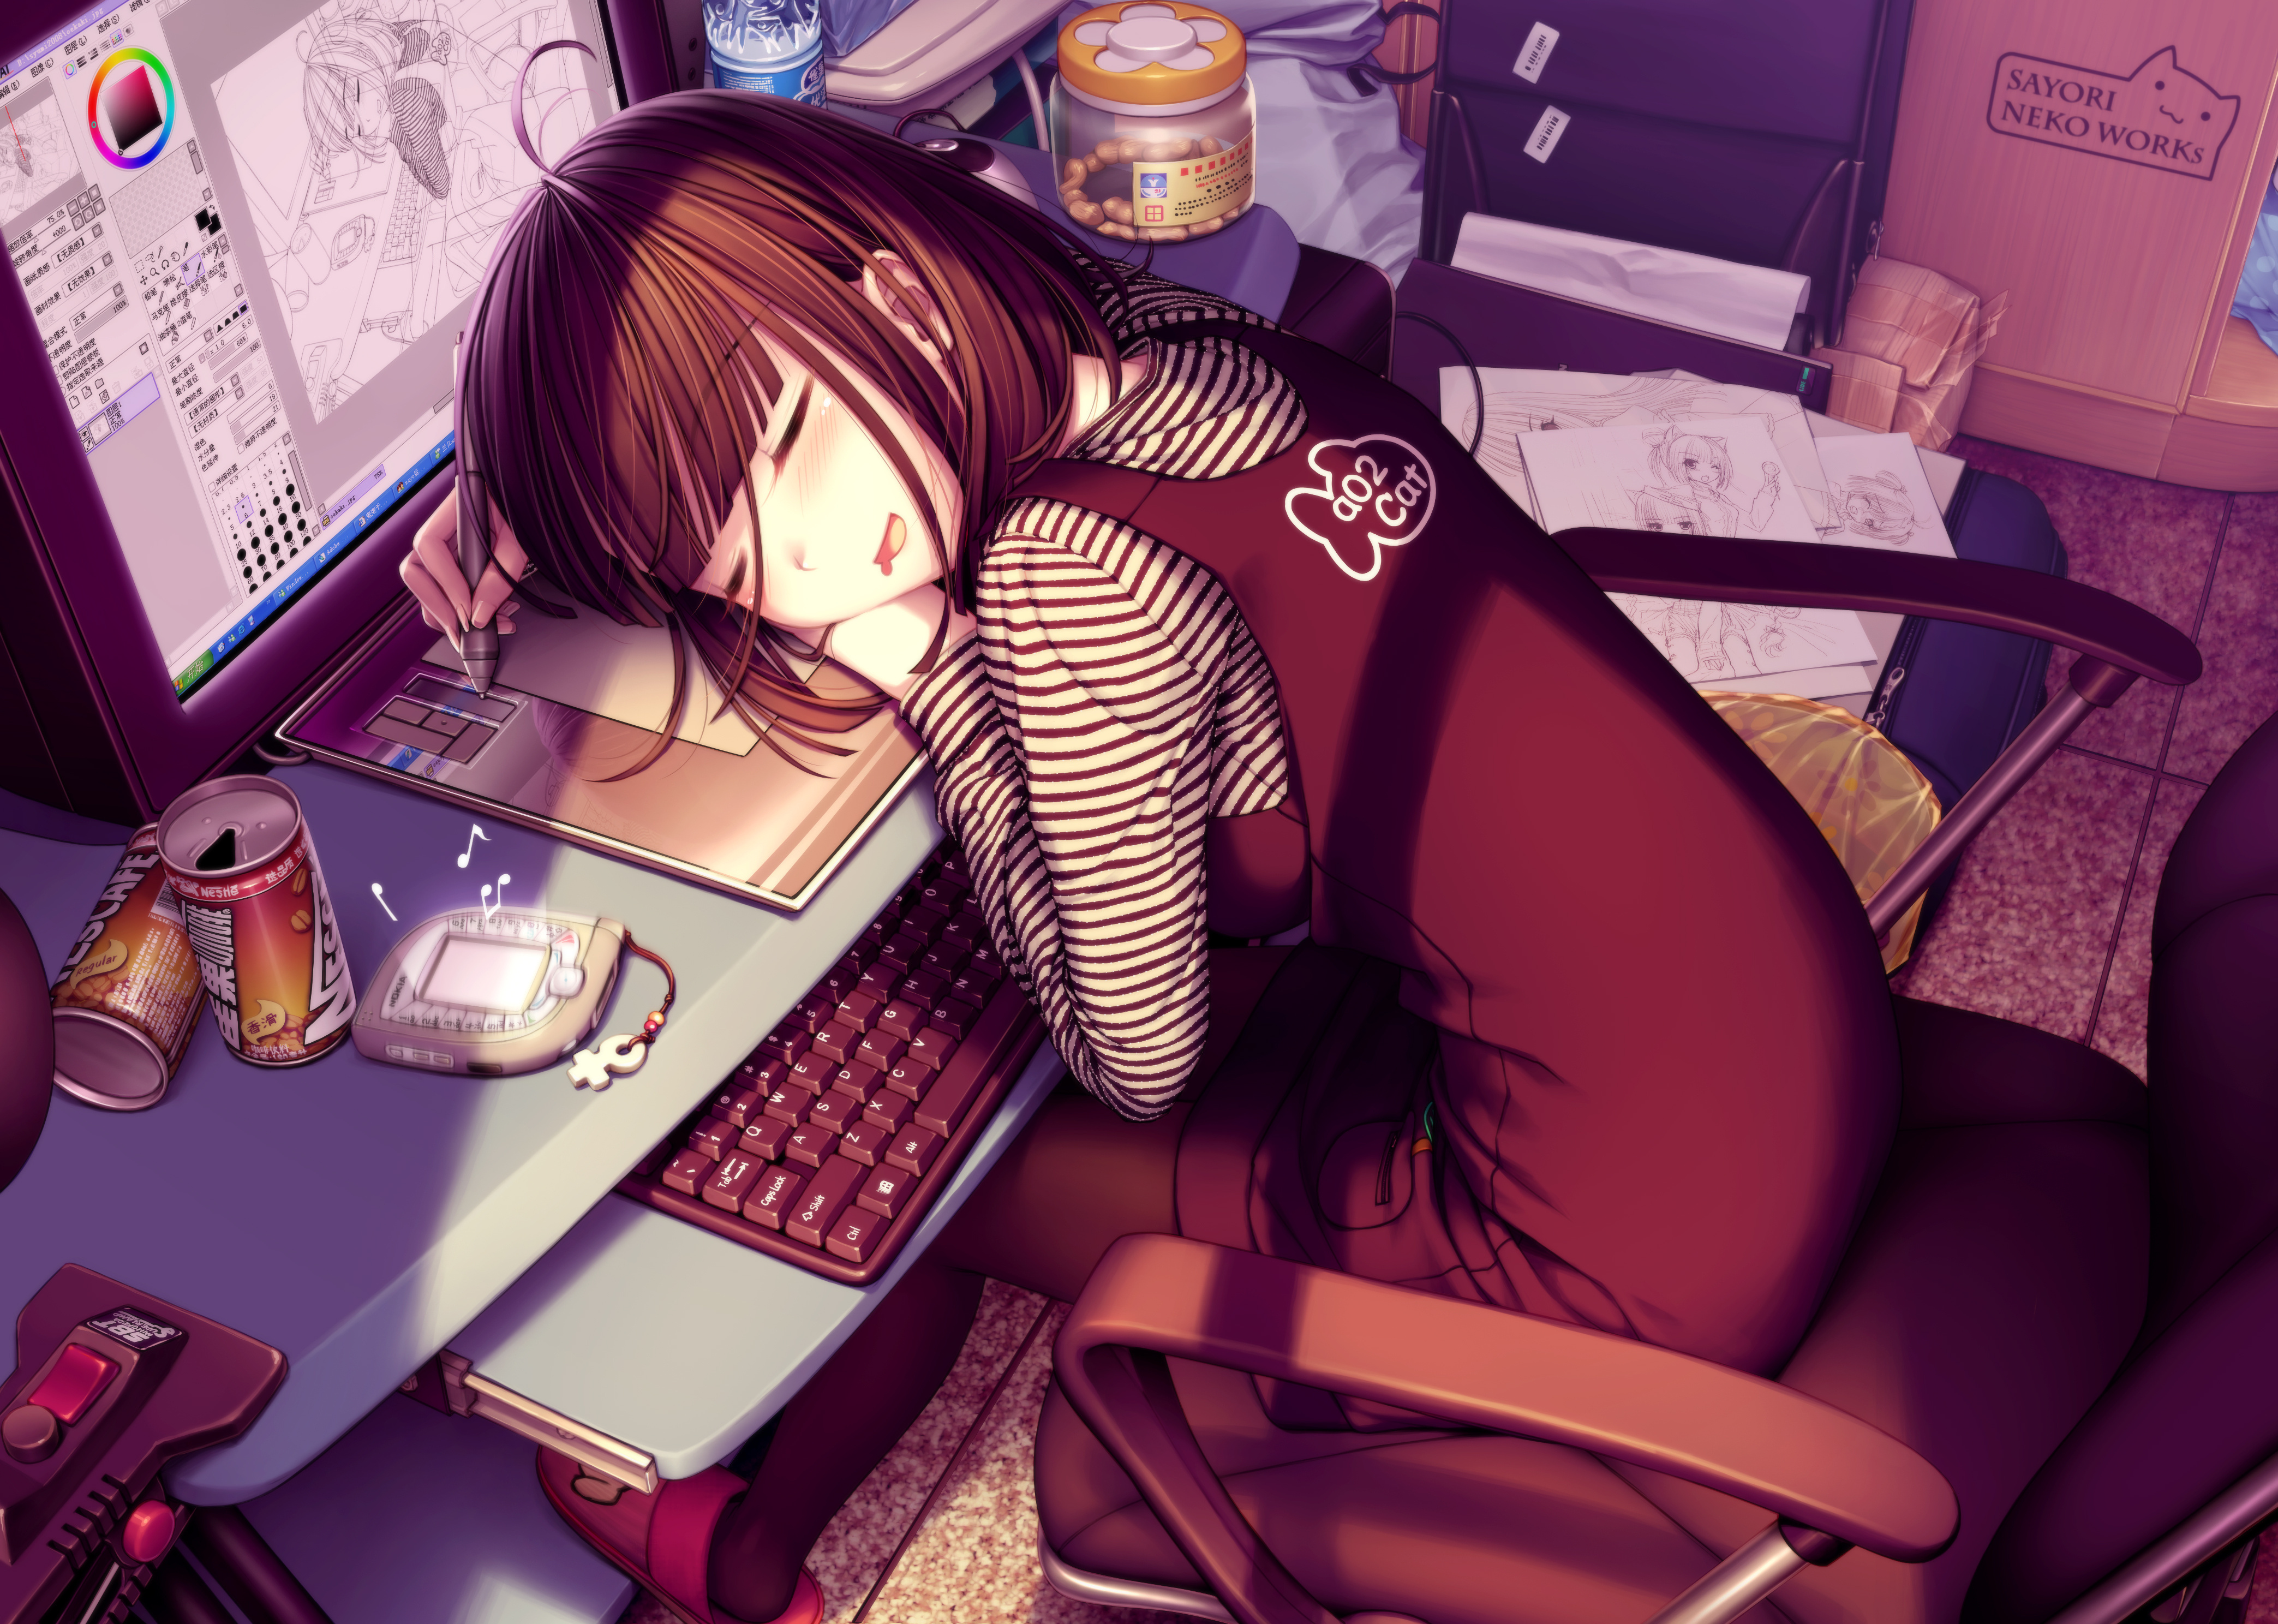 Sayori Taking A Rest 4k Ultra HD Wallpaper Background Image